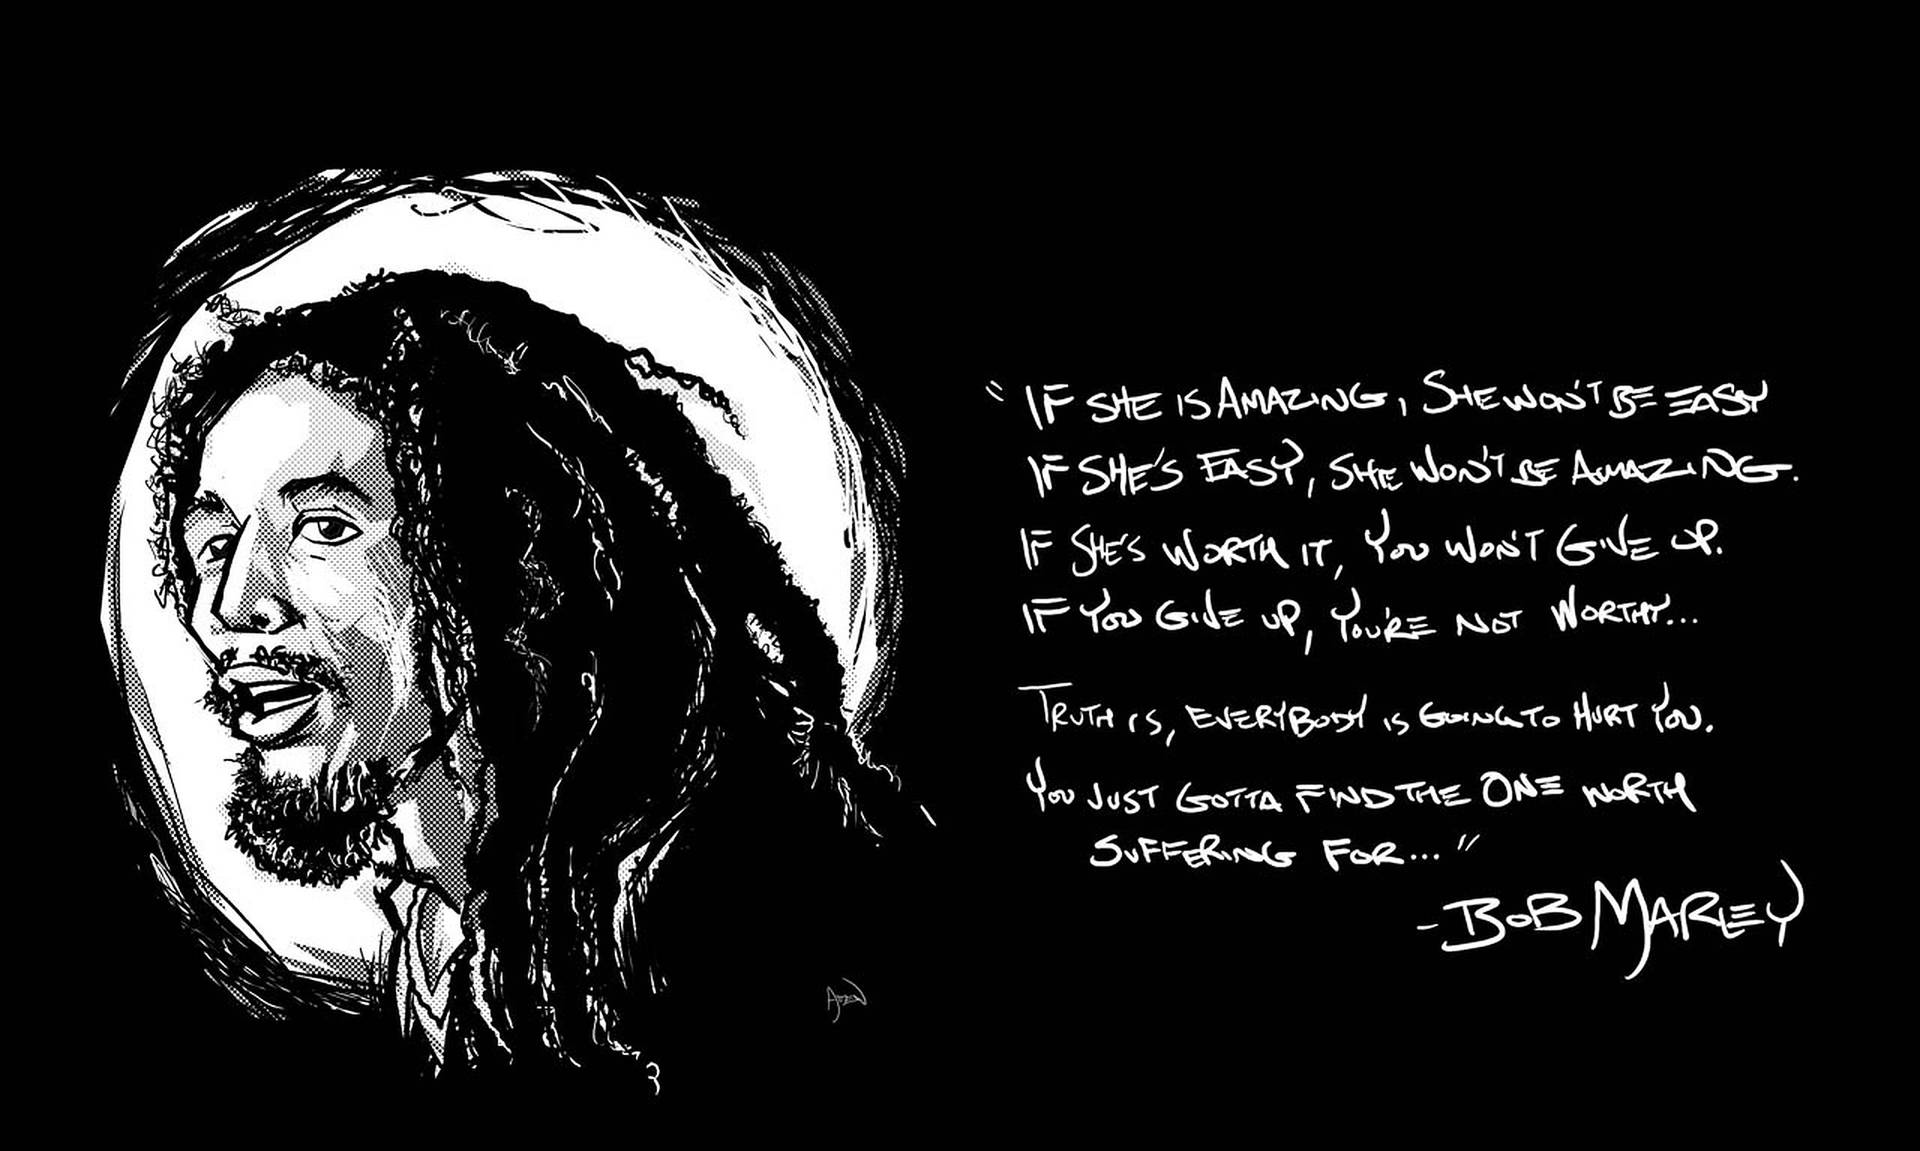 Free Bob Marley Quotes Wallpaper Downloads, [100+] Bob Marley Quotes  Wallpapers for FREE 